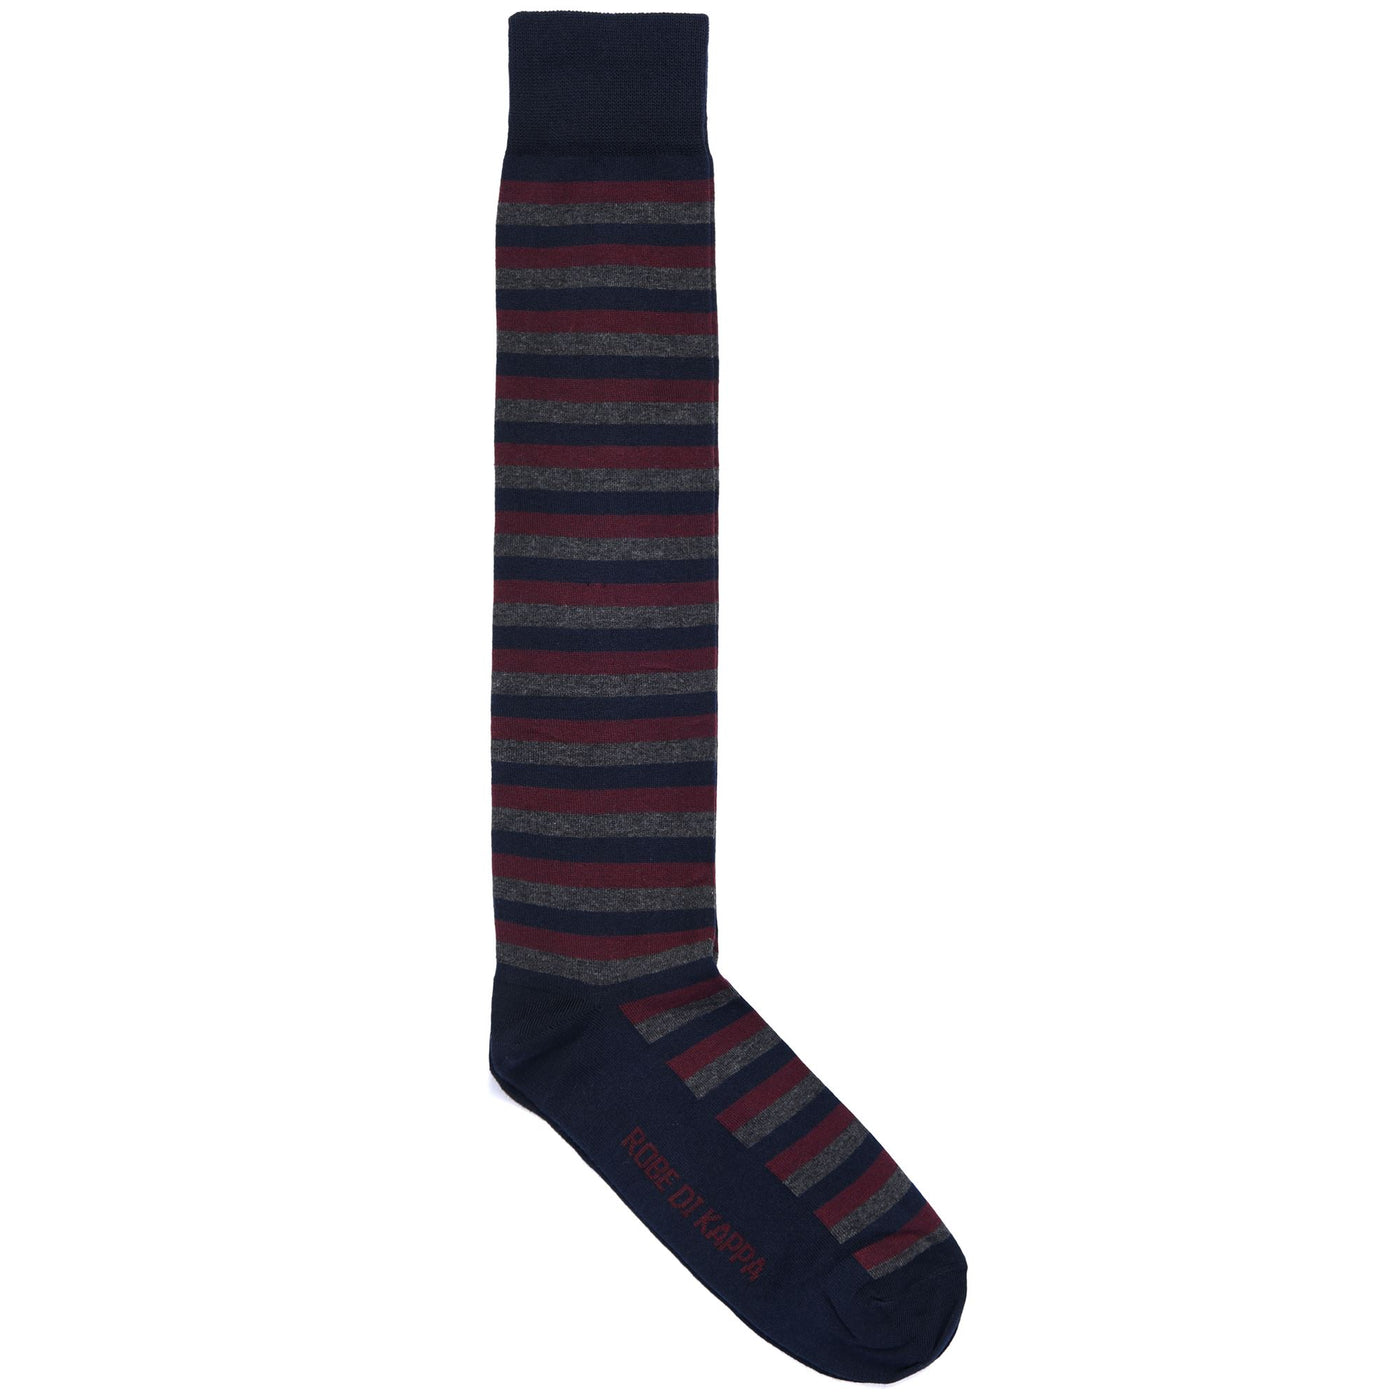 Socks Man AIDAN Knee High Sock Blue Navy-Red Dahlia-Grey Charcoal striped | robedikappa Photo (jpg Rgb)			